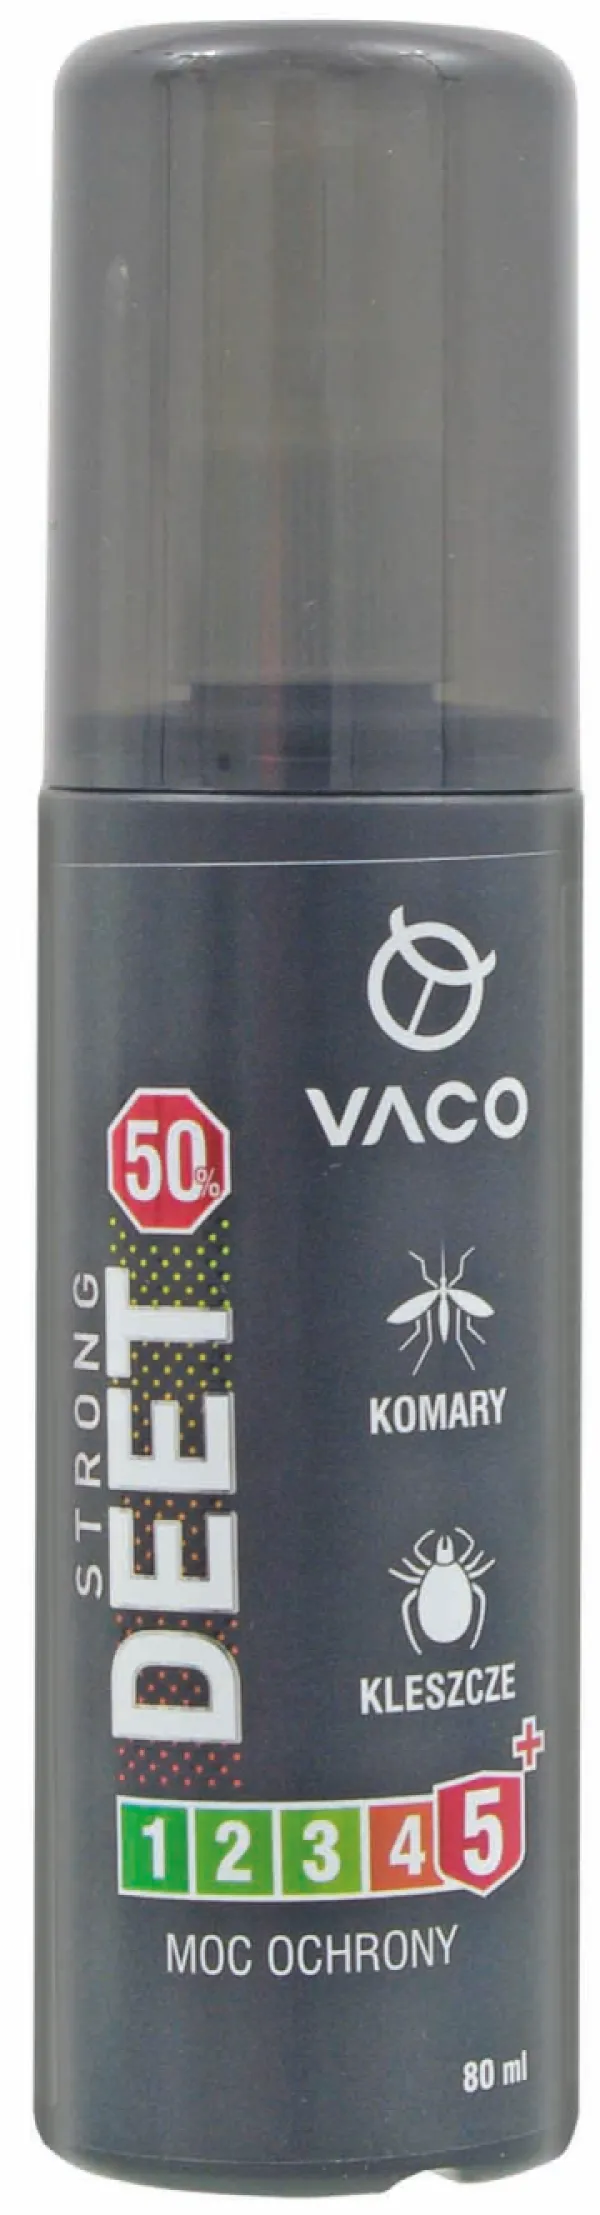 VACO Vaco Strong Spray 50% DEET Anti Insect + Geraniol 80ml